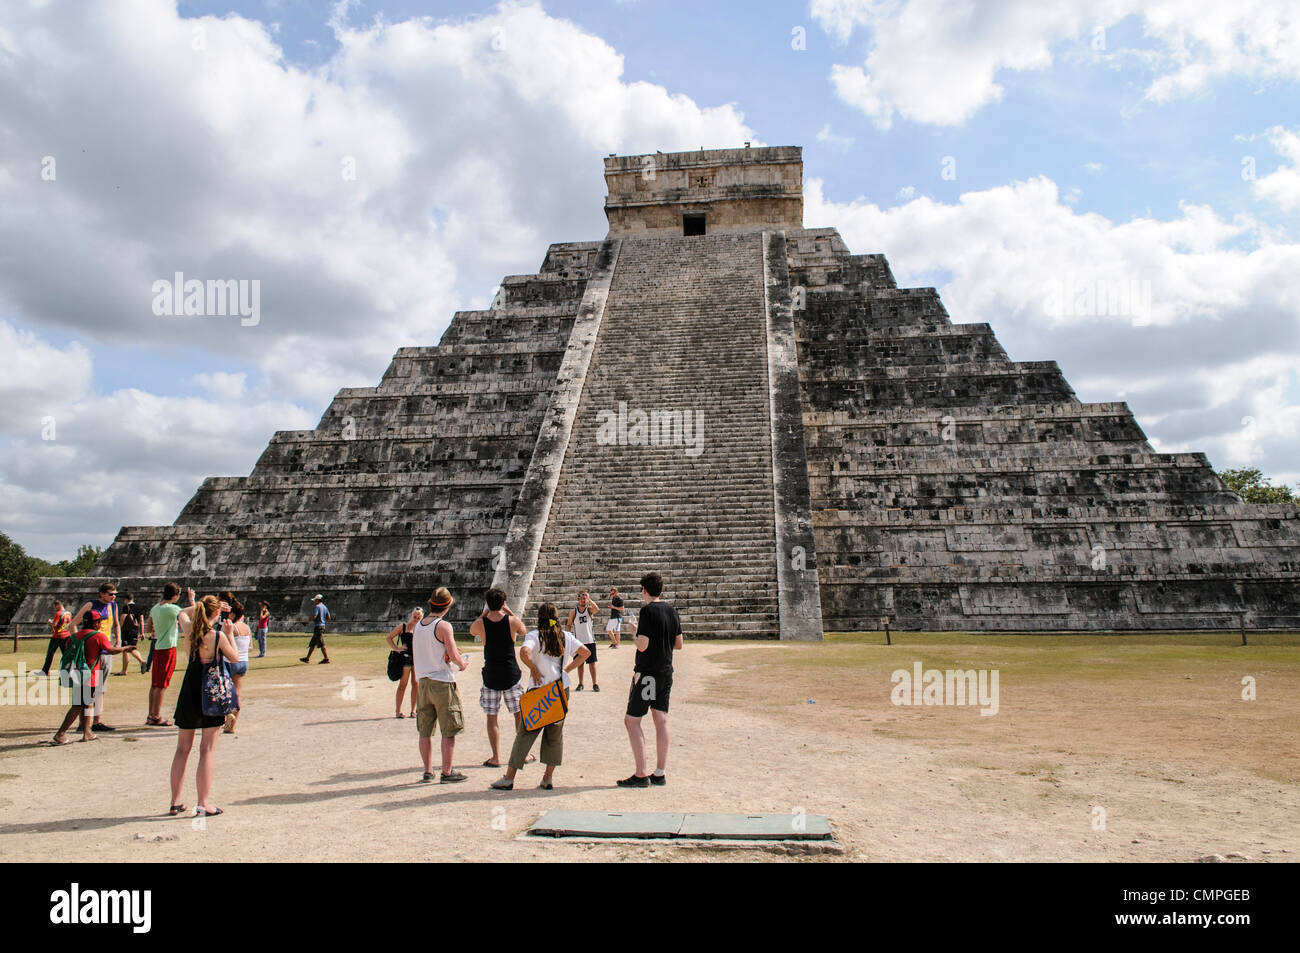 CHICHEN ITZA, Mexico - A group of tourists visiting the Temple of Kukulkan (El Castillo) at Chichen Itza Archeological Zone, ruins of a major Maya civilization city in the heart of Mexico's Yucatan Peninsula. Stock Photo